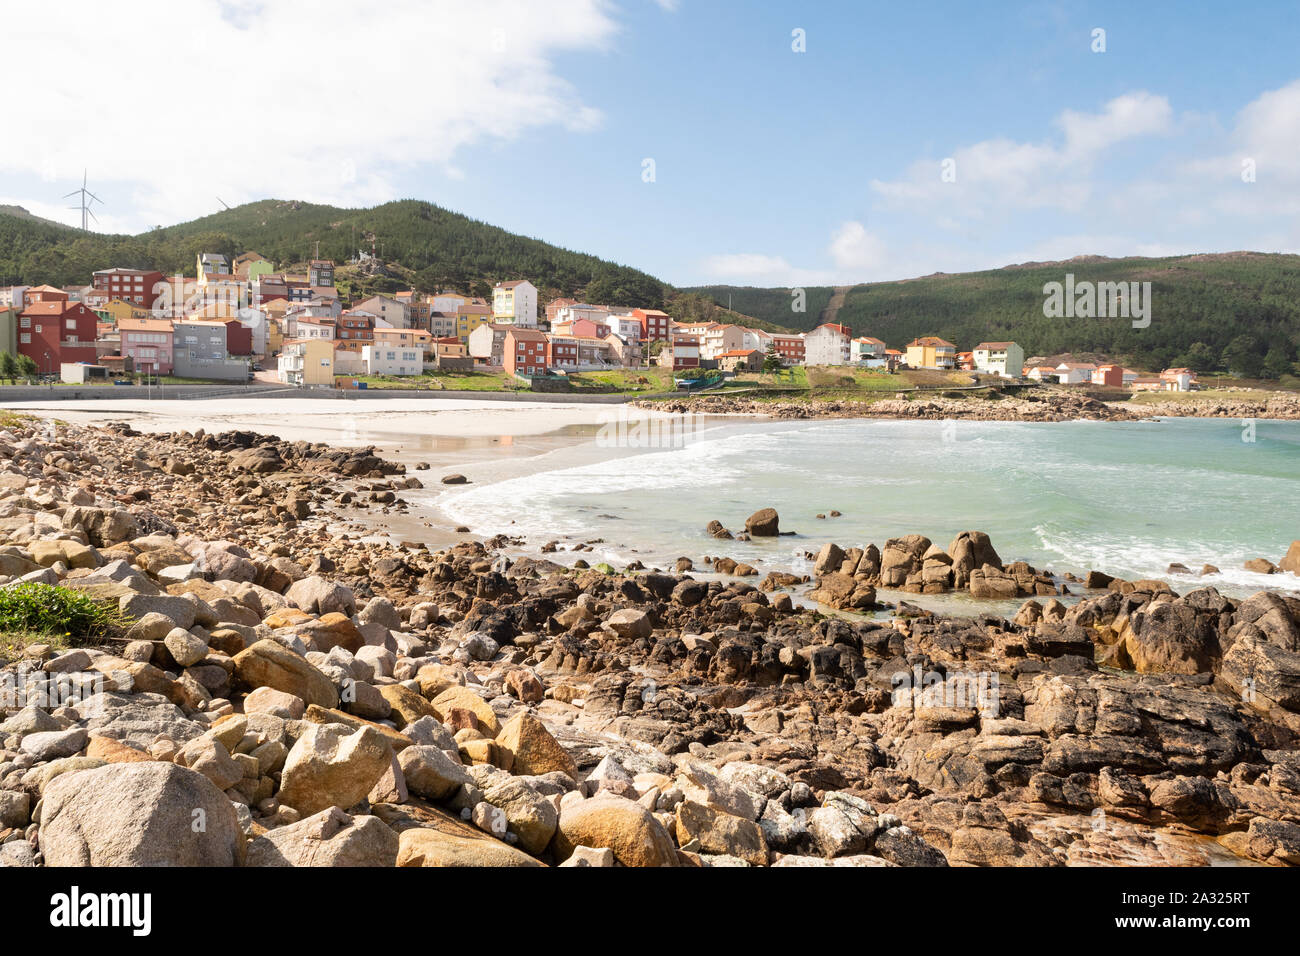 Arou, Galizia, Costa da Muerte, Galizia, Spagna, Europa Foto Stock